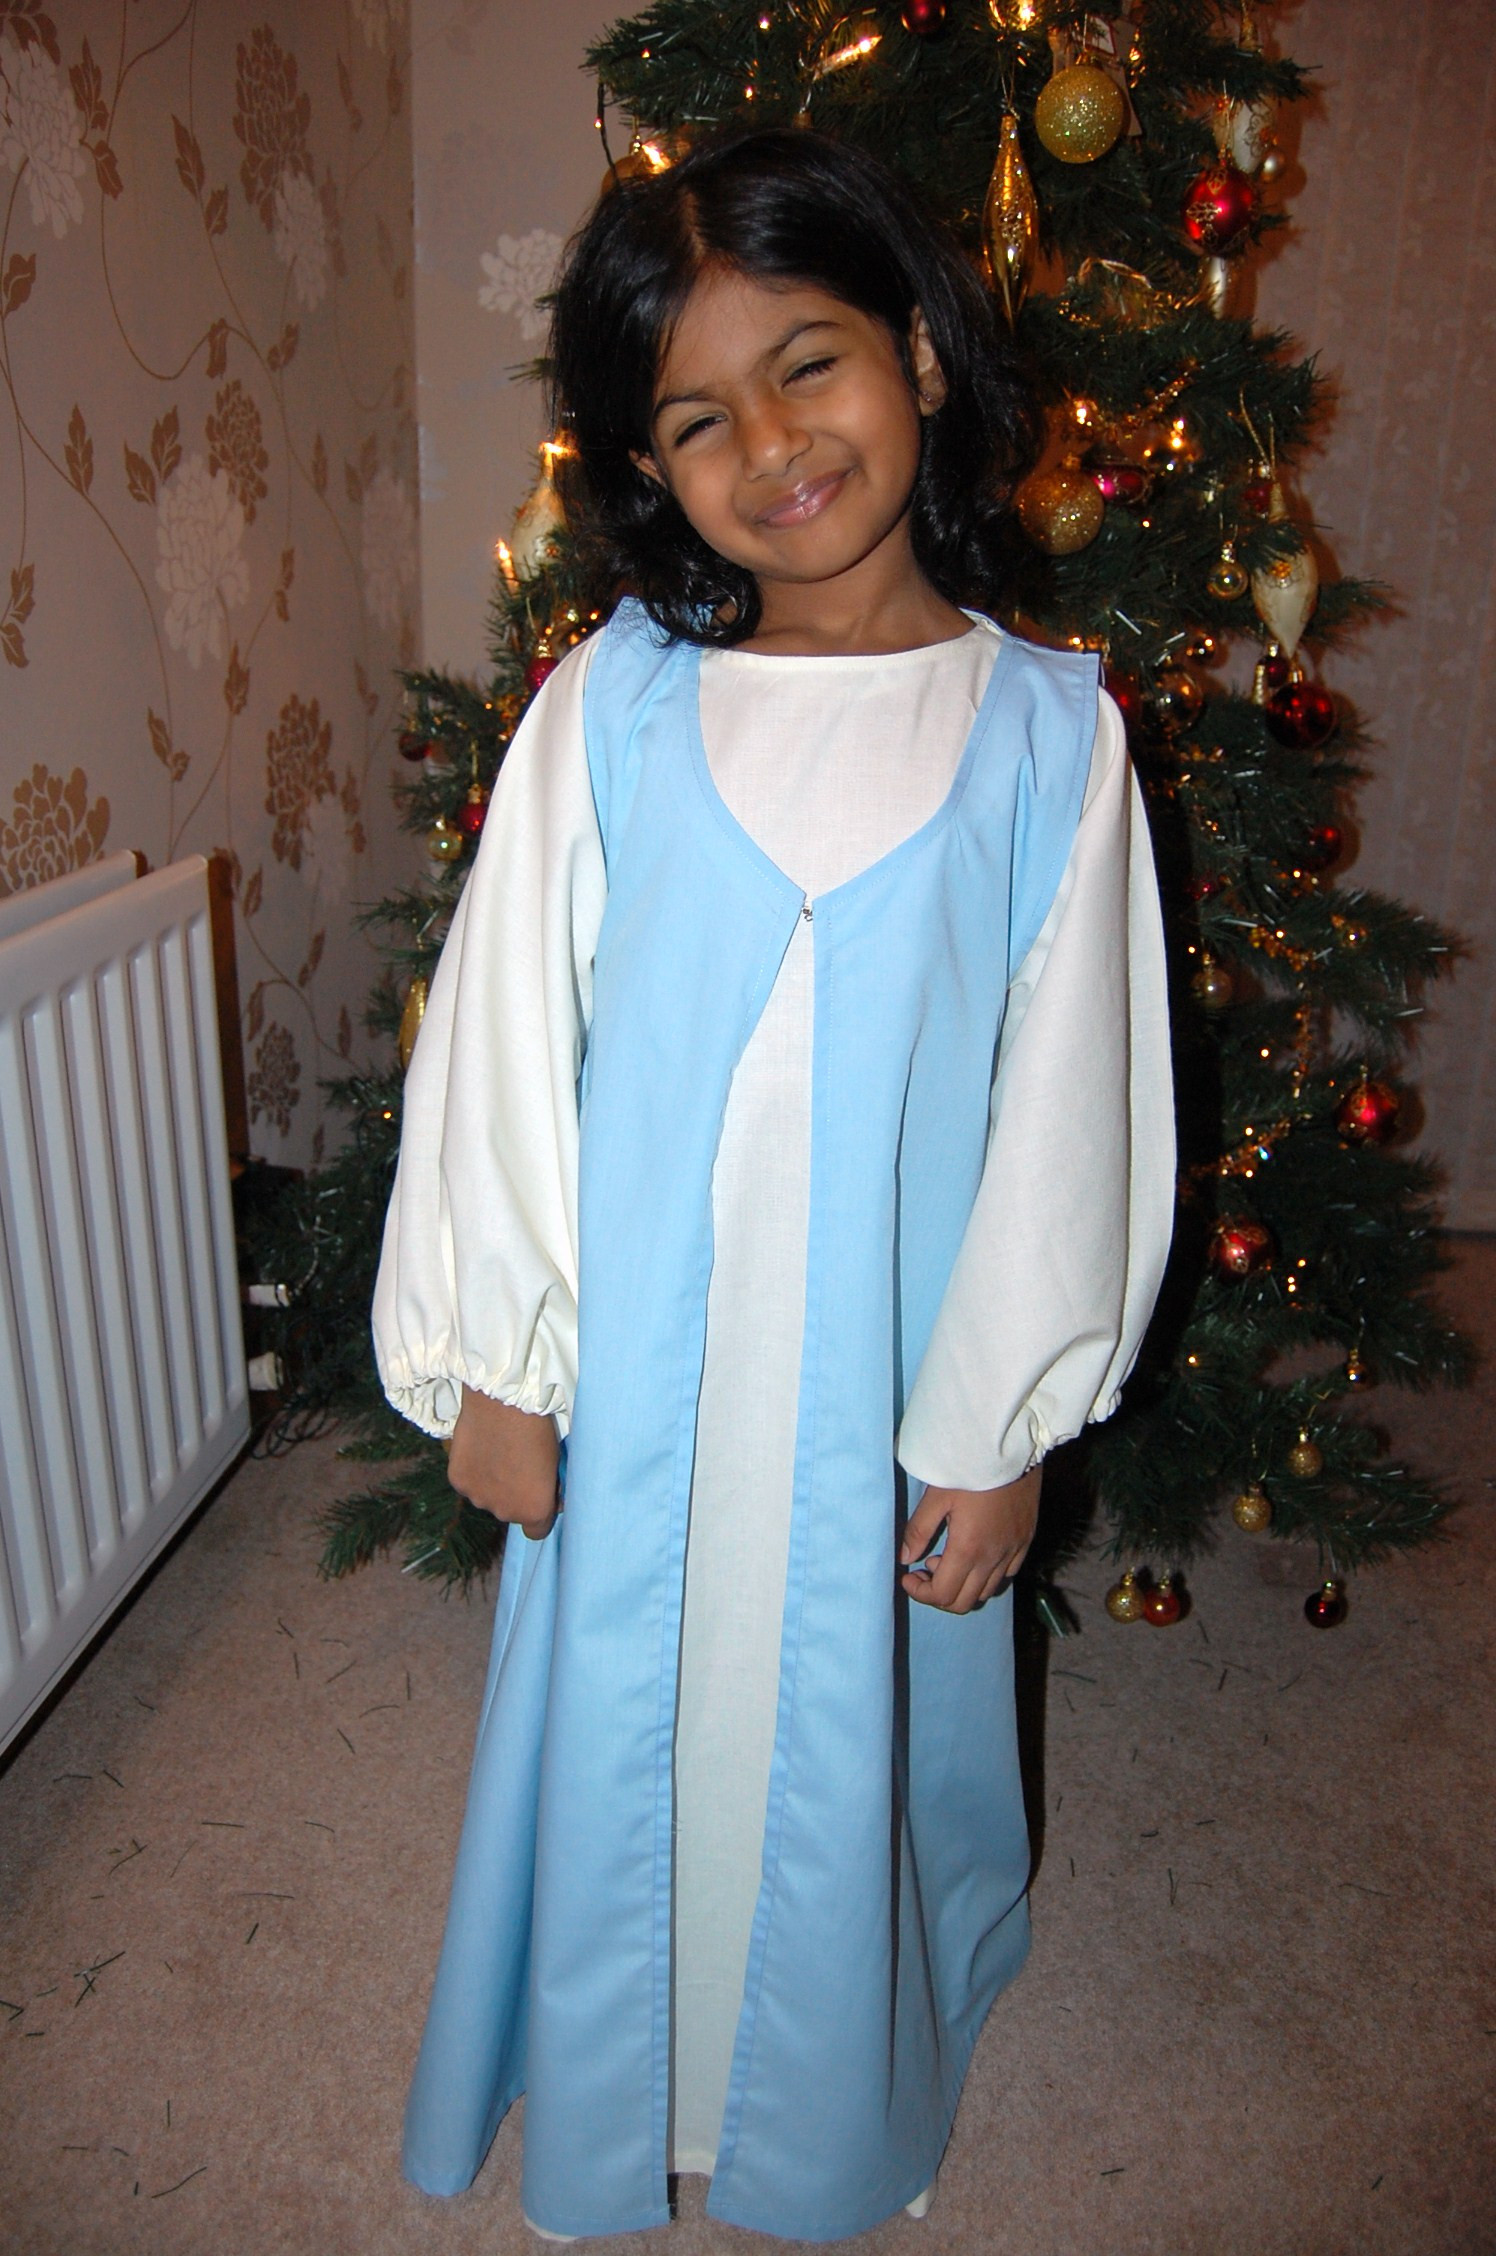 DIY Nativity Costumes
 Vogue 1359 DIY twist front jersey dress and DIY nativity